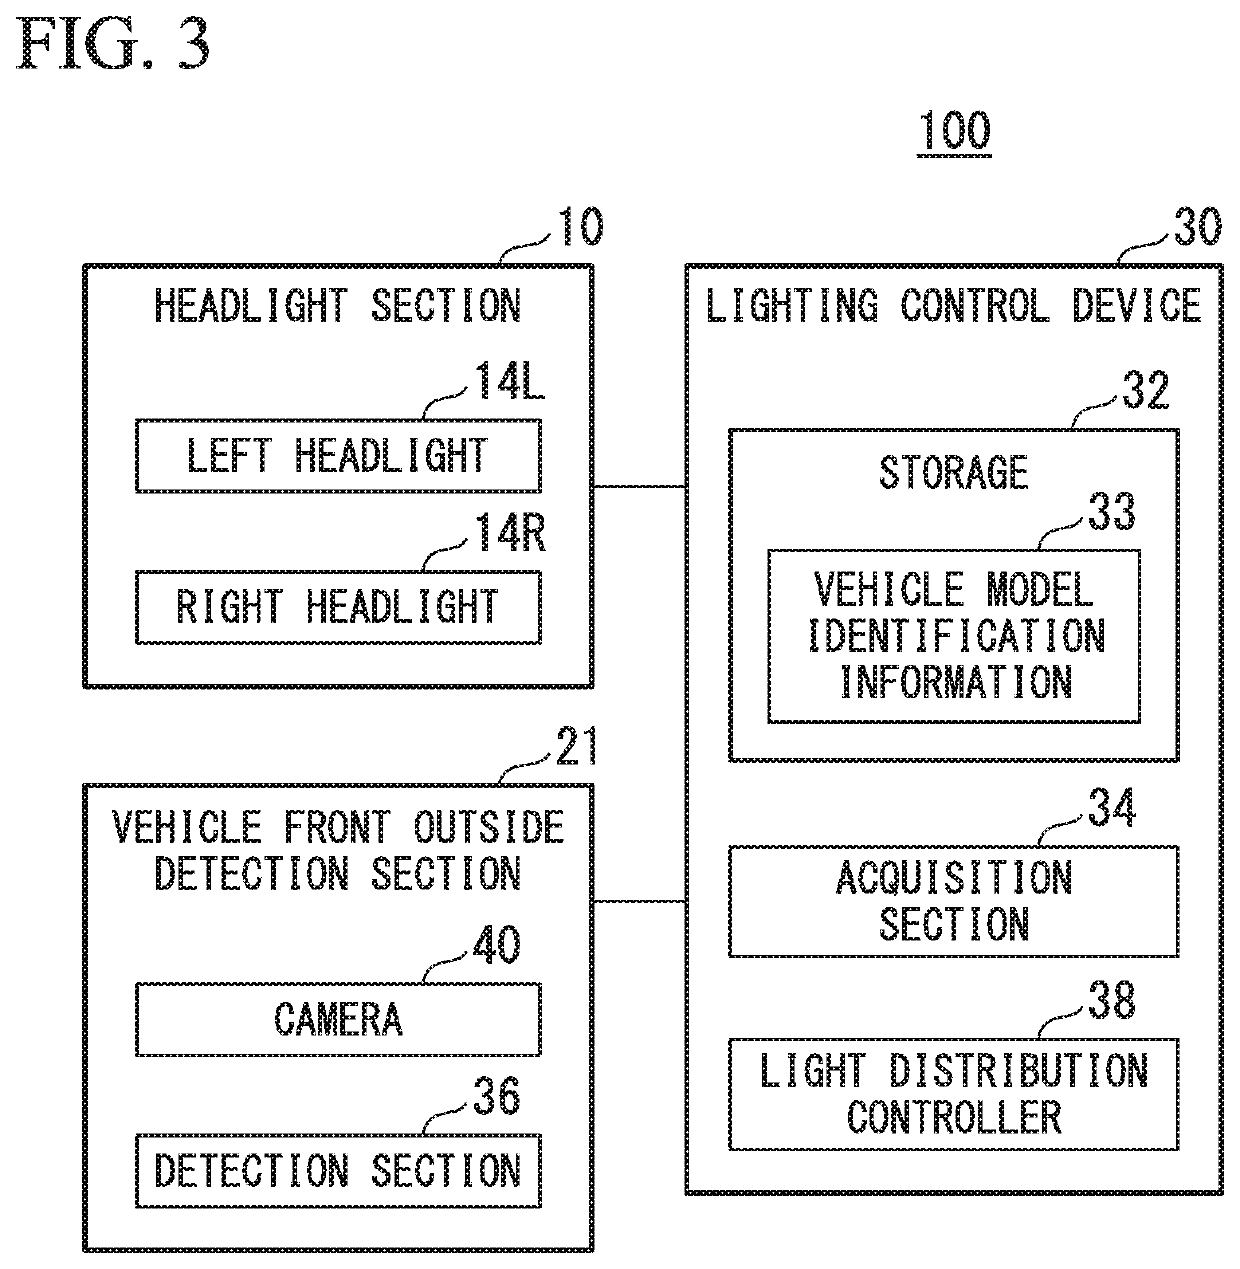 Lighting control device, lighting control method and lighting tool for vehicle